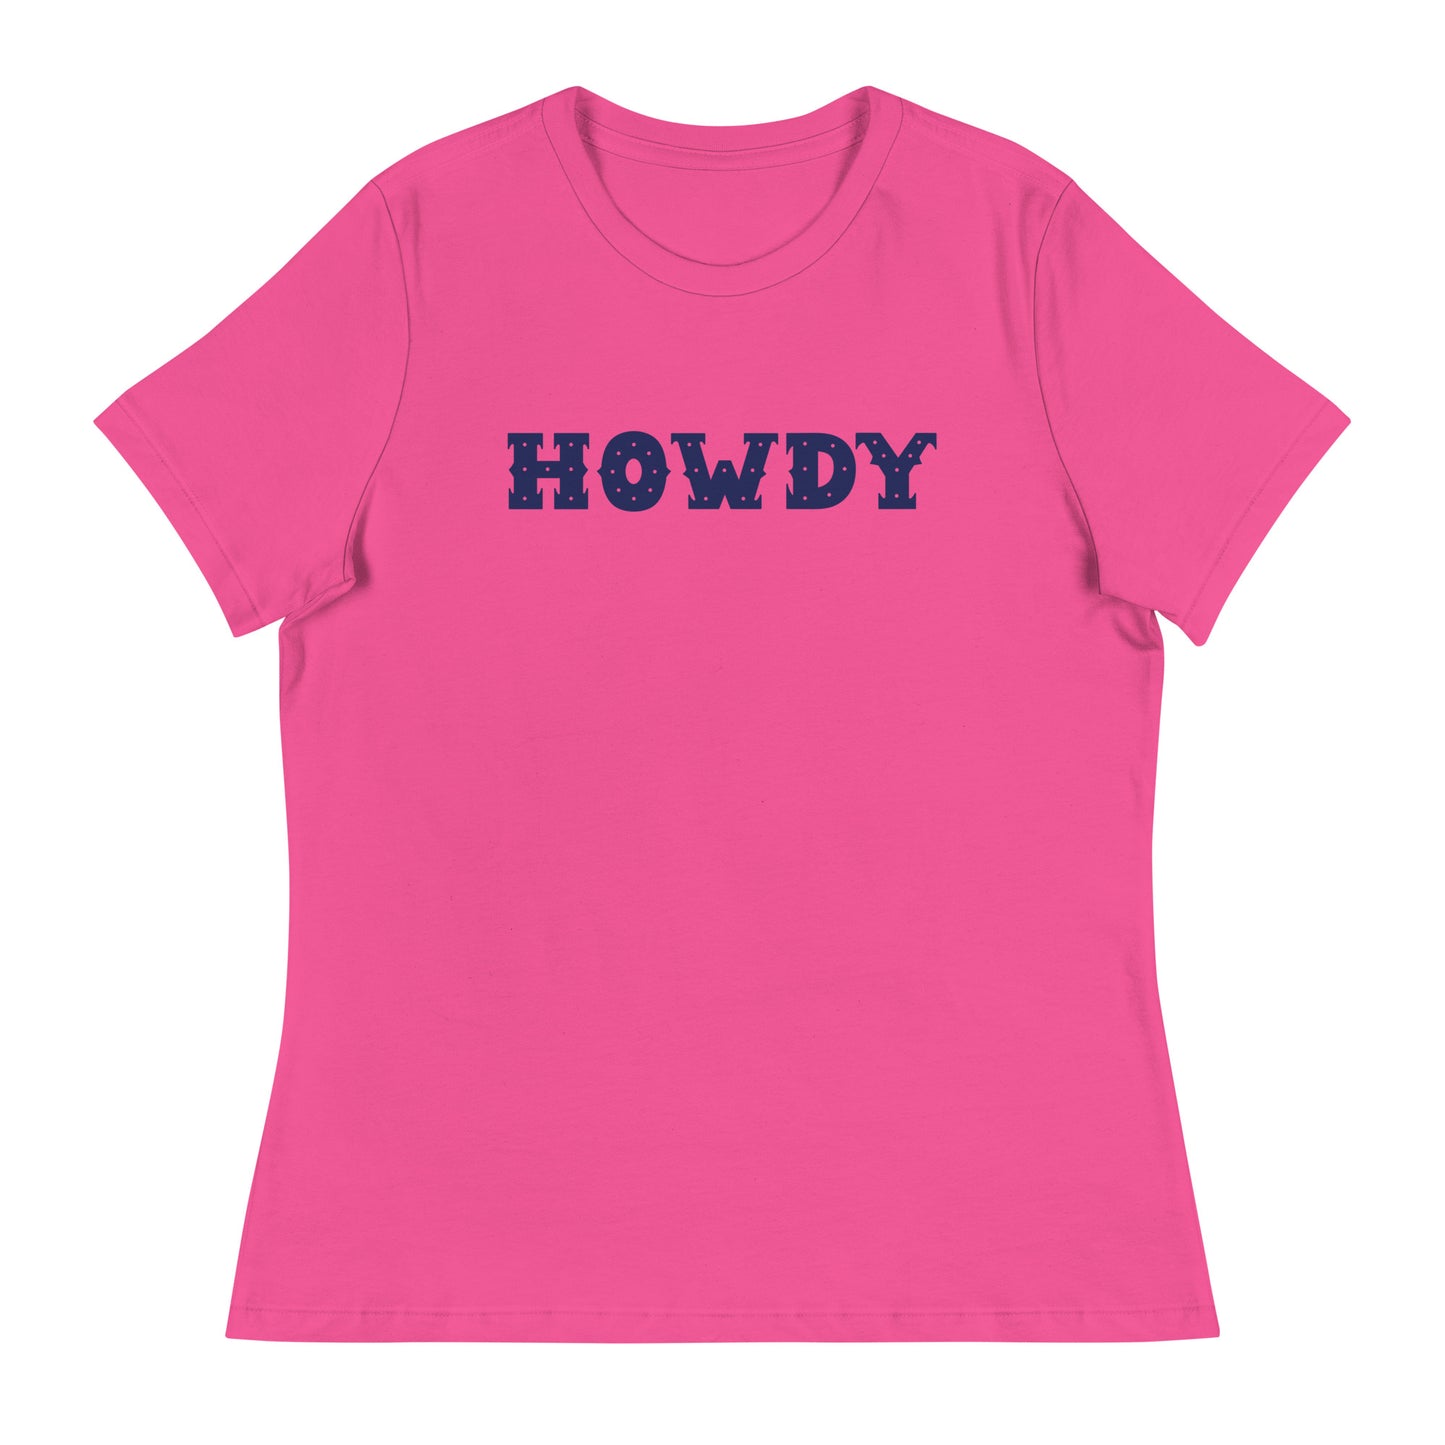 Howdy Women's T-Shirt